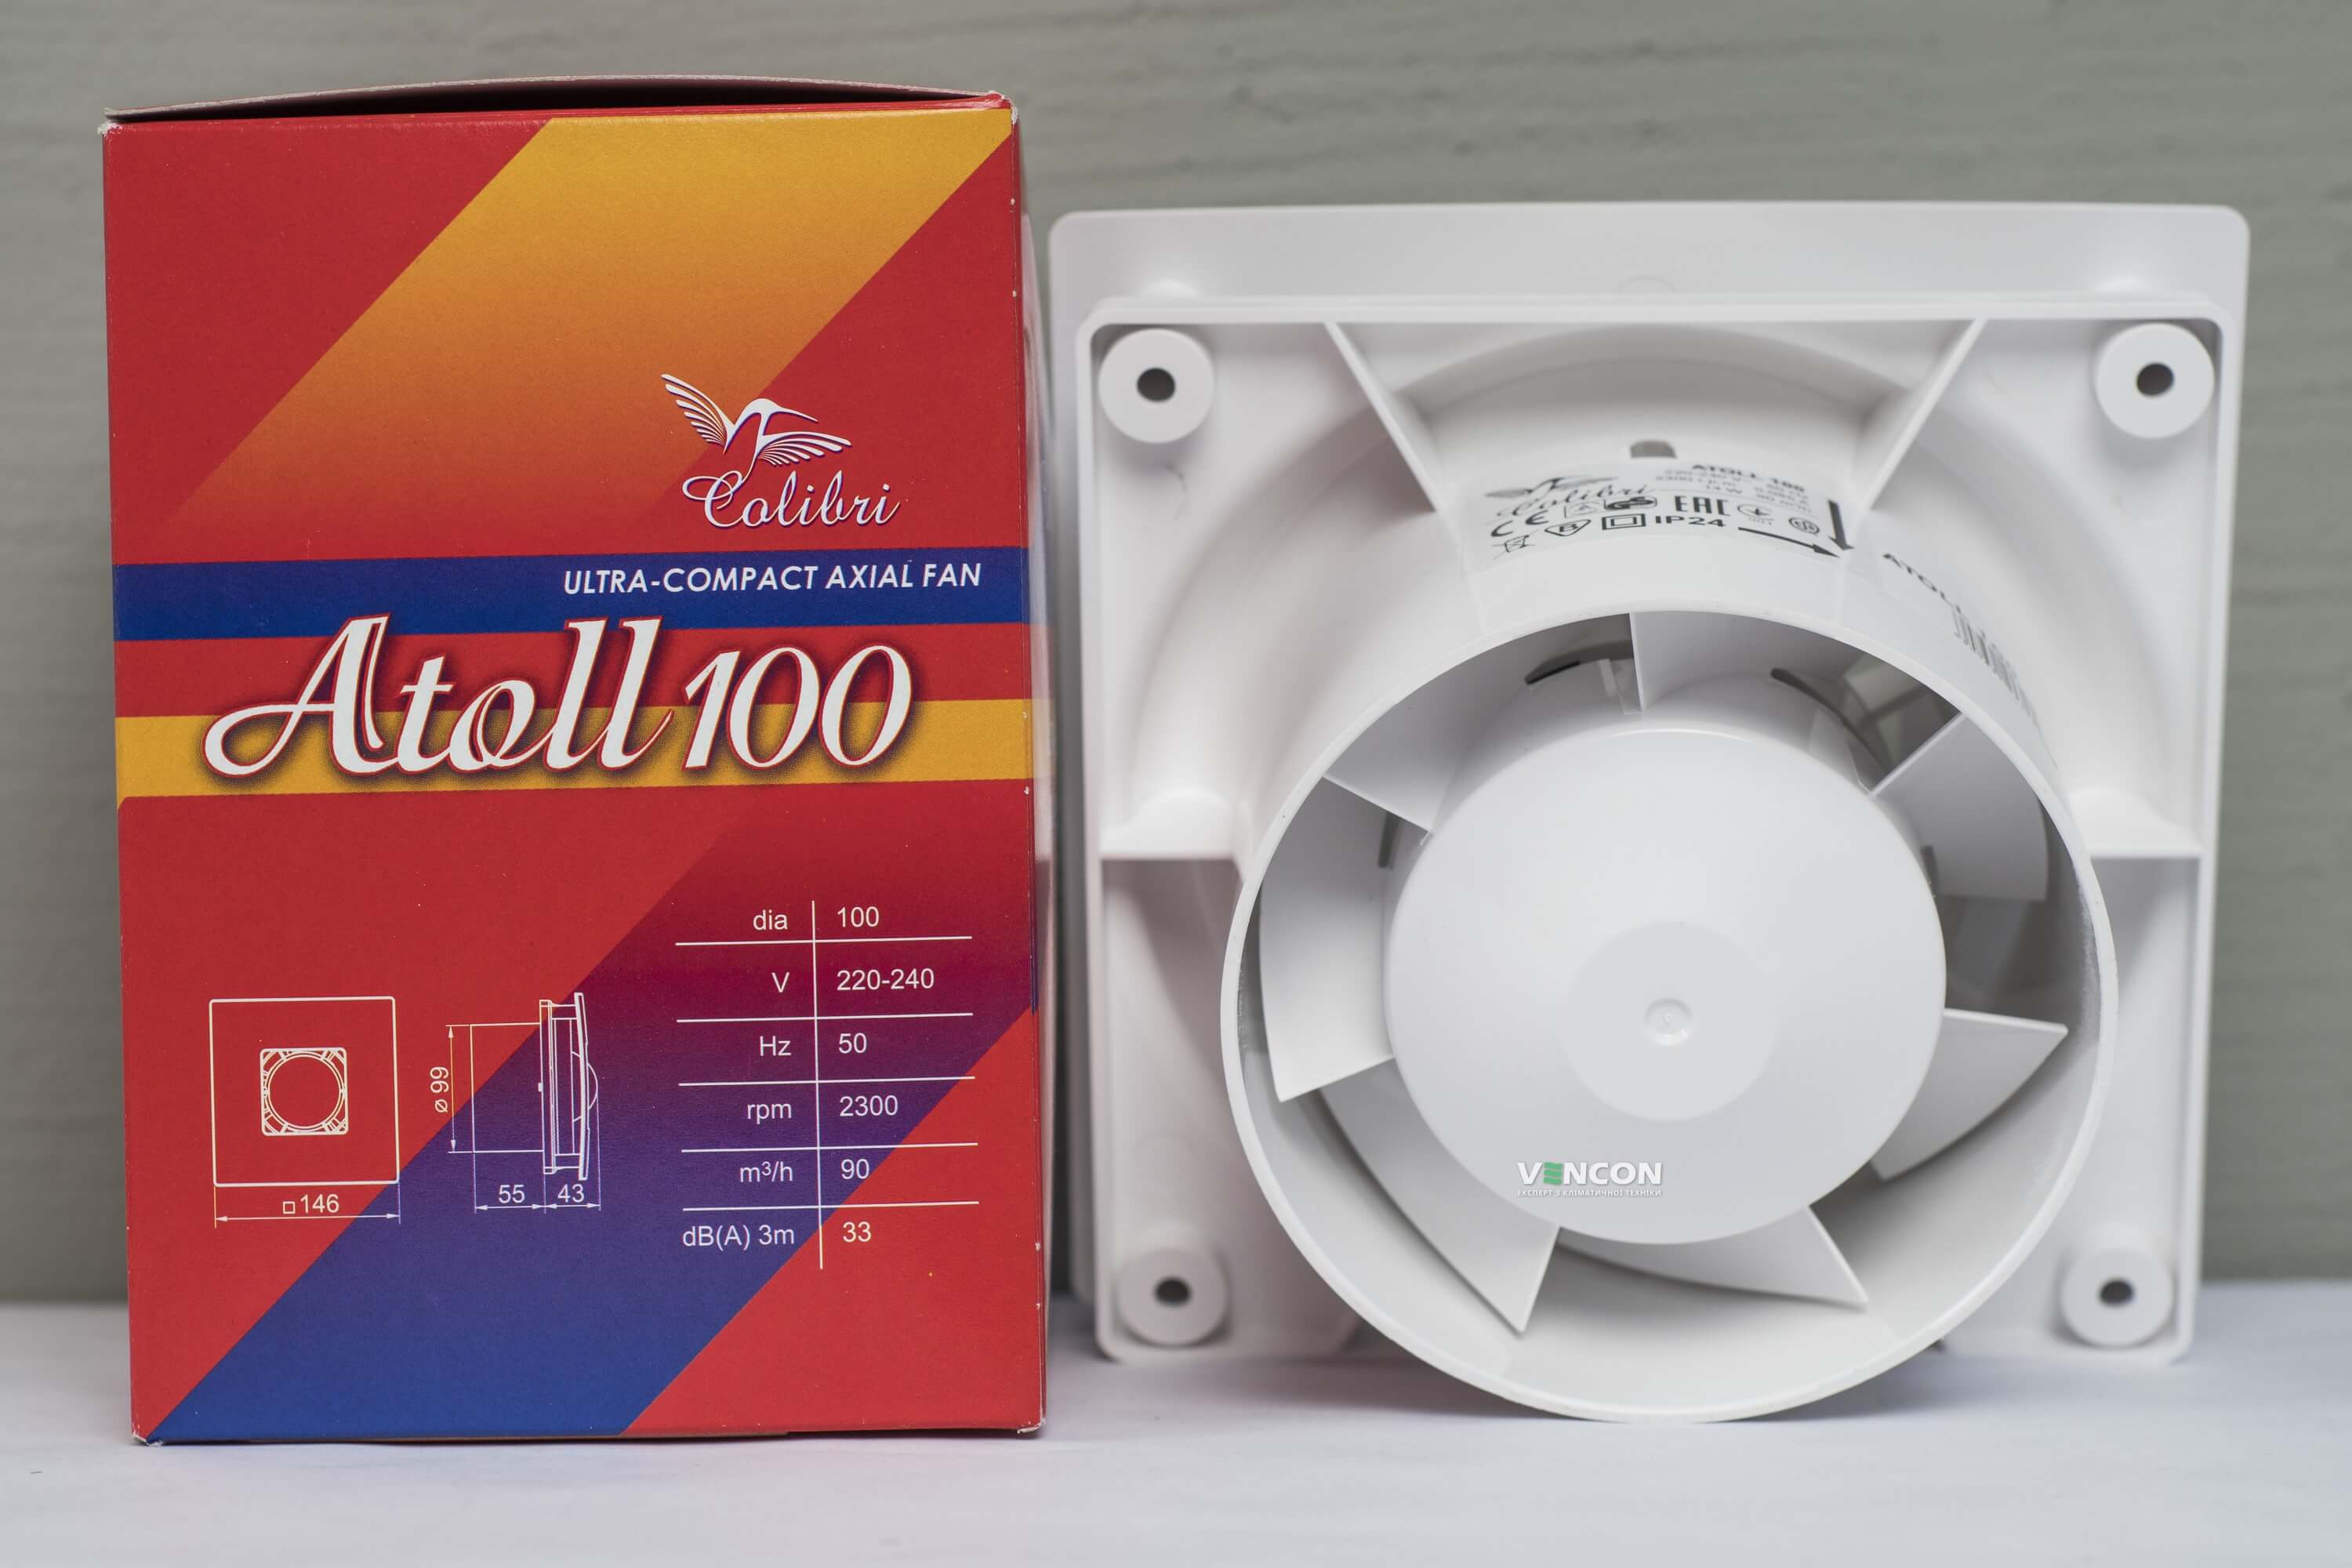 Вытяжной вентилятор Colibri Atoll 100 внешний вид - фото 9